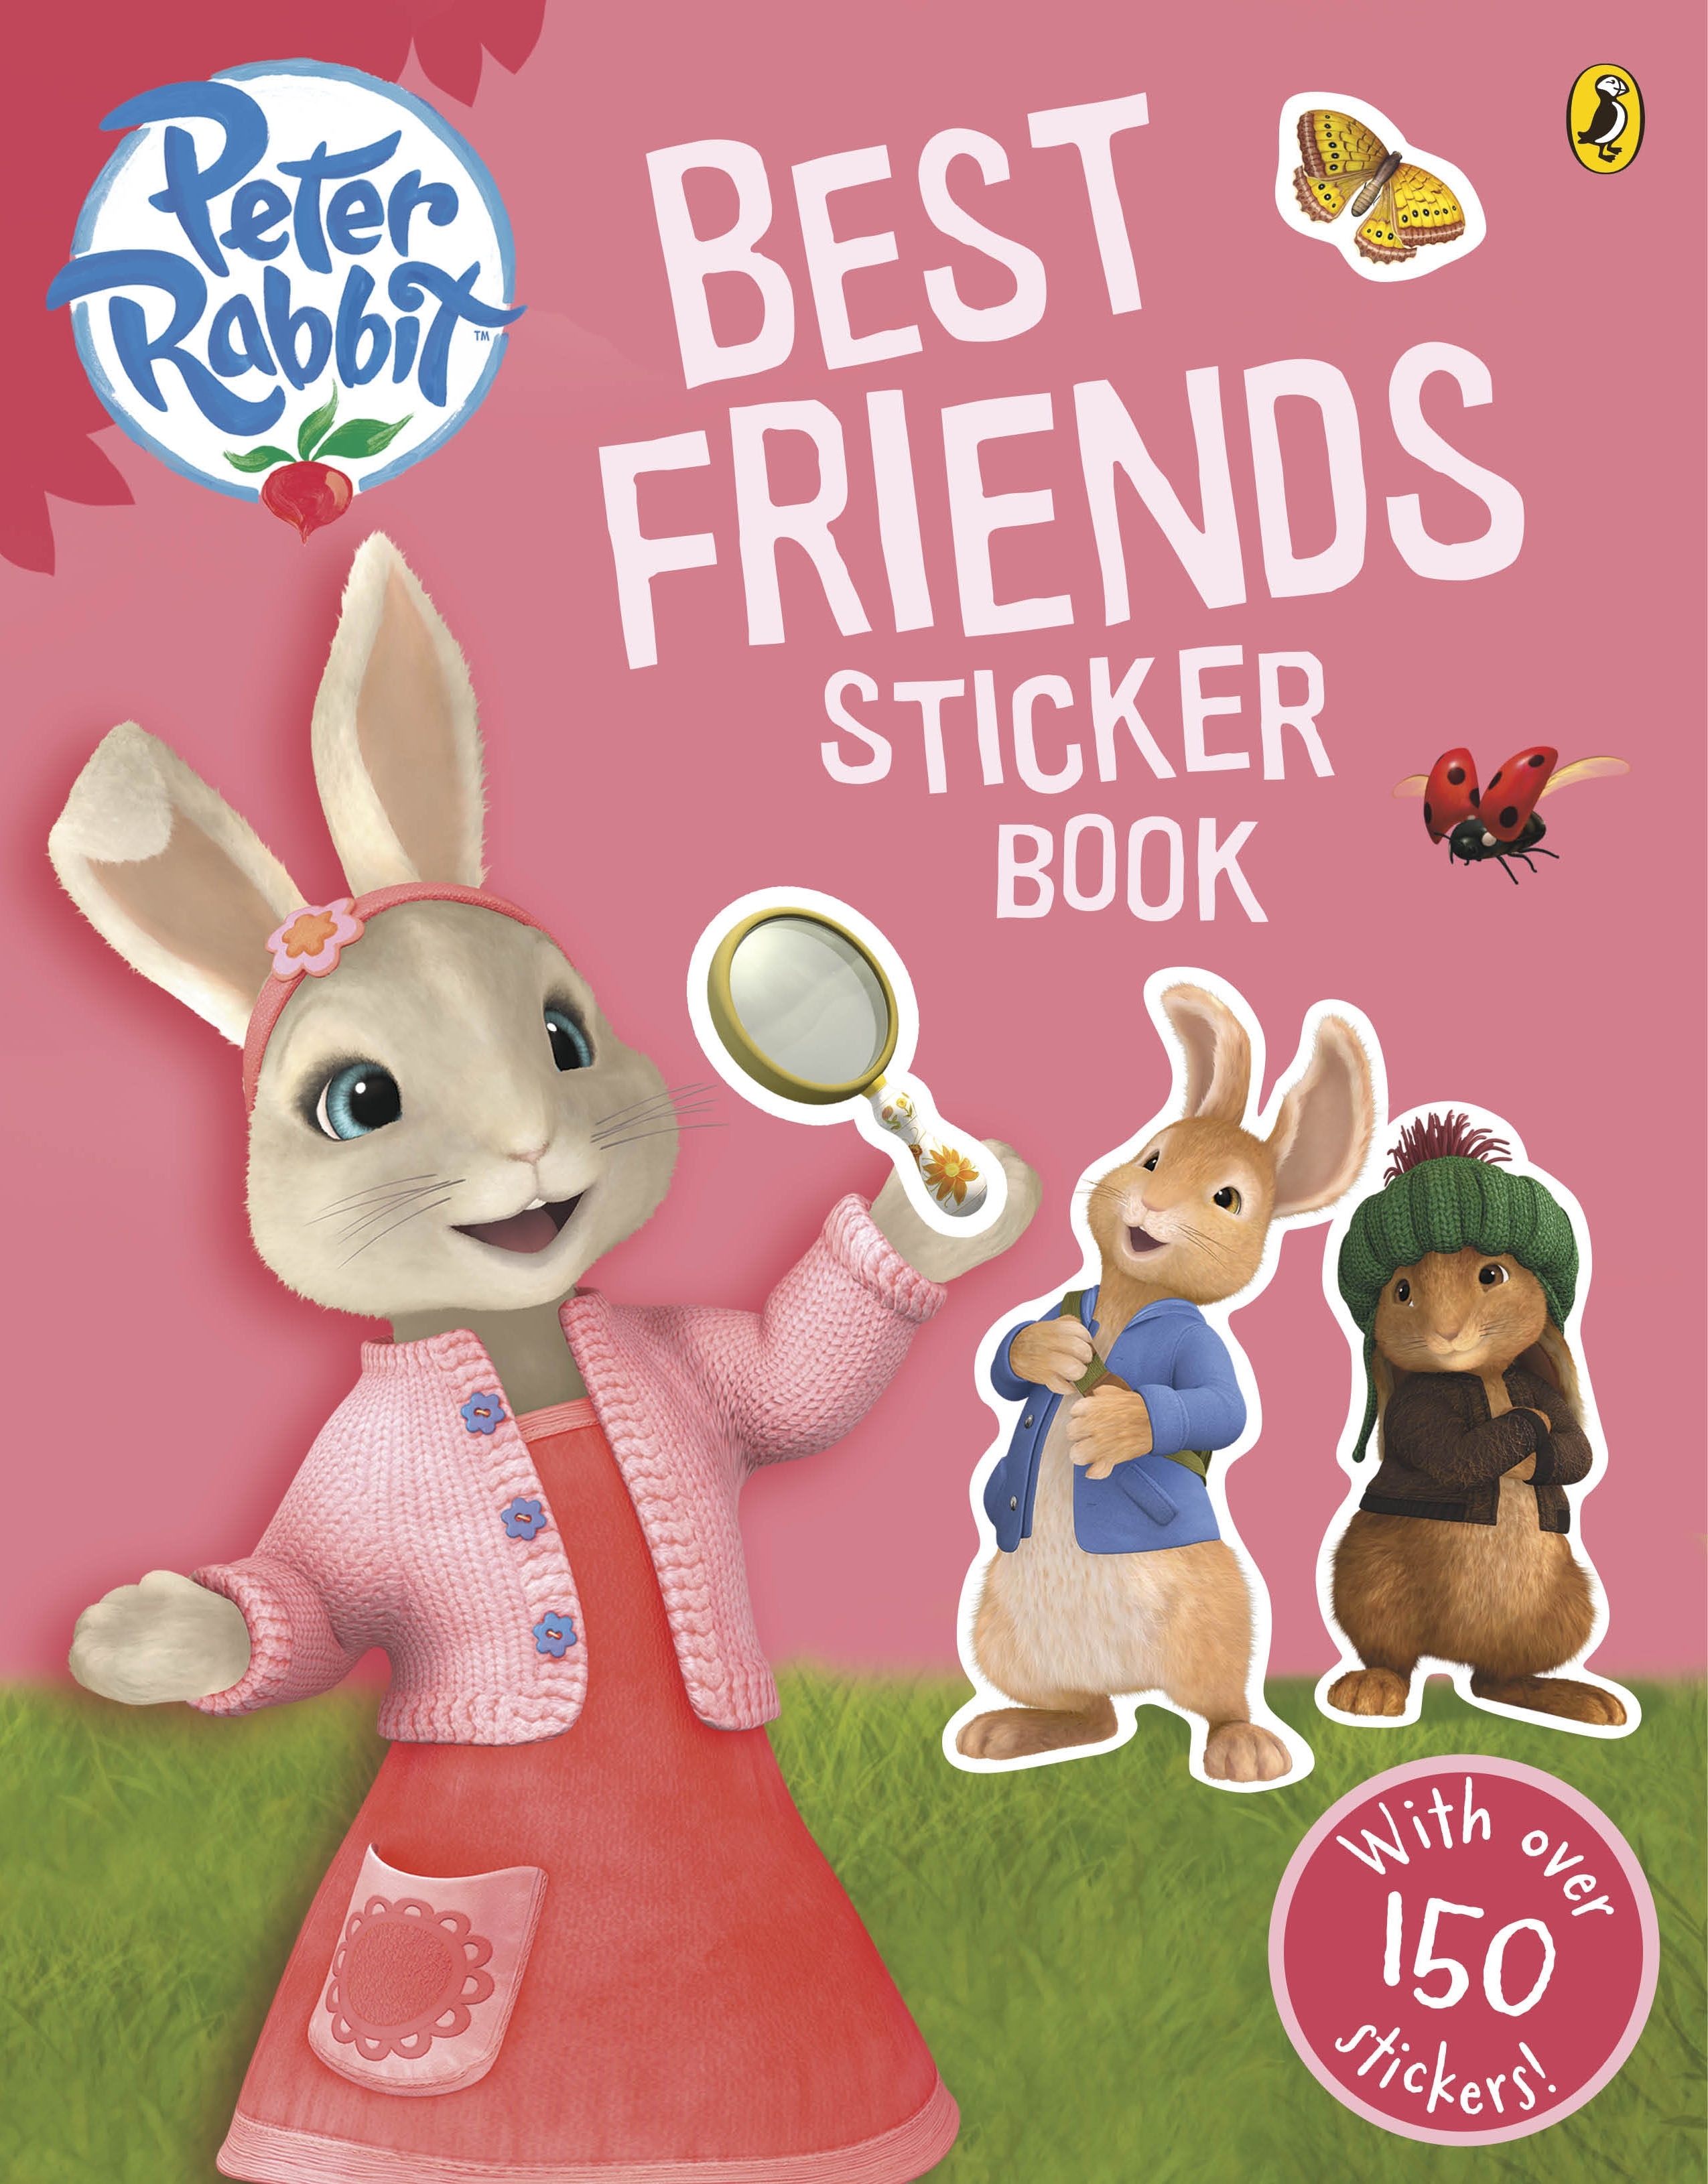 Book “Peter Rabbit Animation: Best Friends Sticker Book” by Beatrix Potter — August 7, 2014